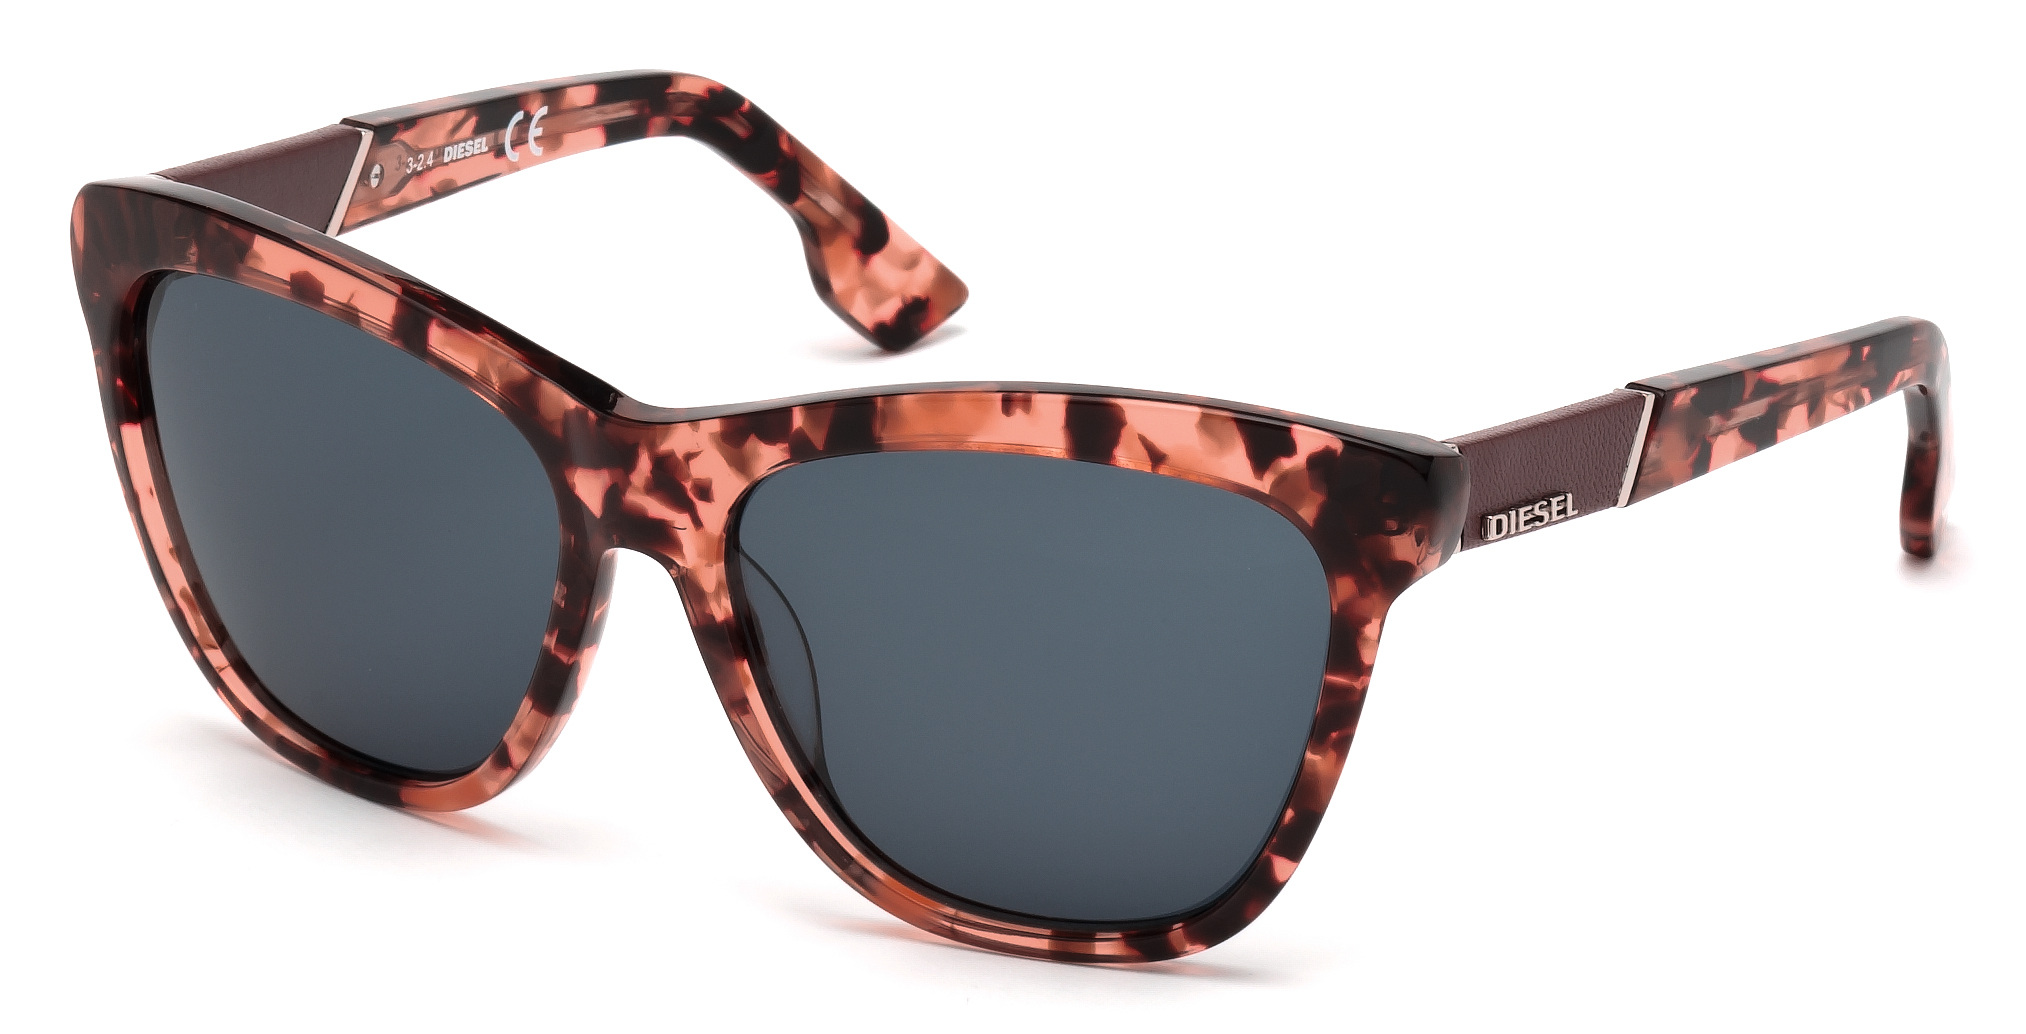 Marcolin Eyewear sunglasses Diesel FW 15 16 (1)